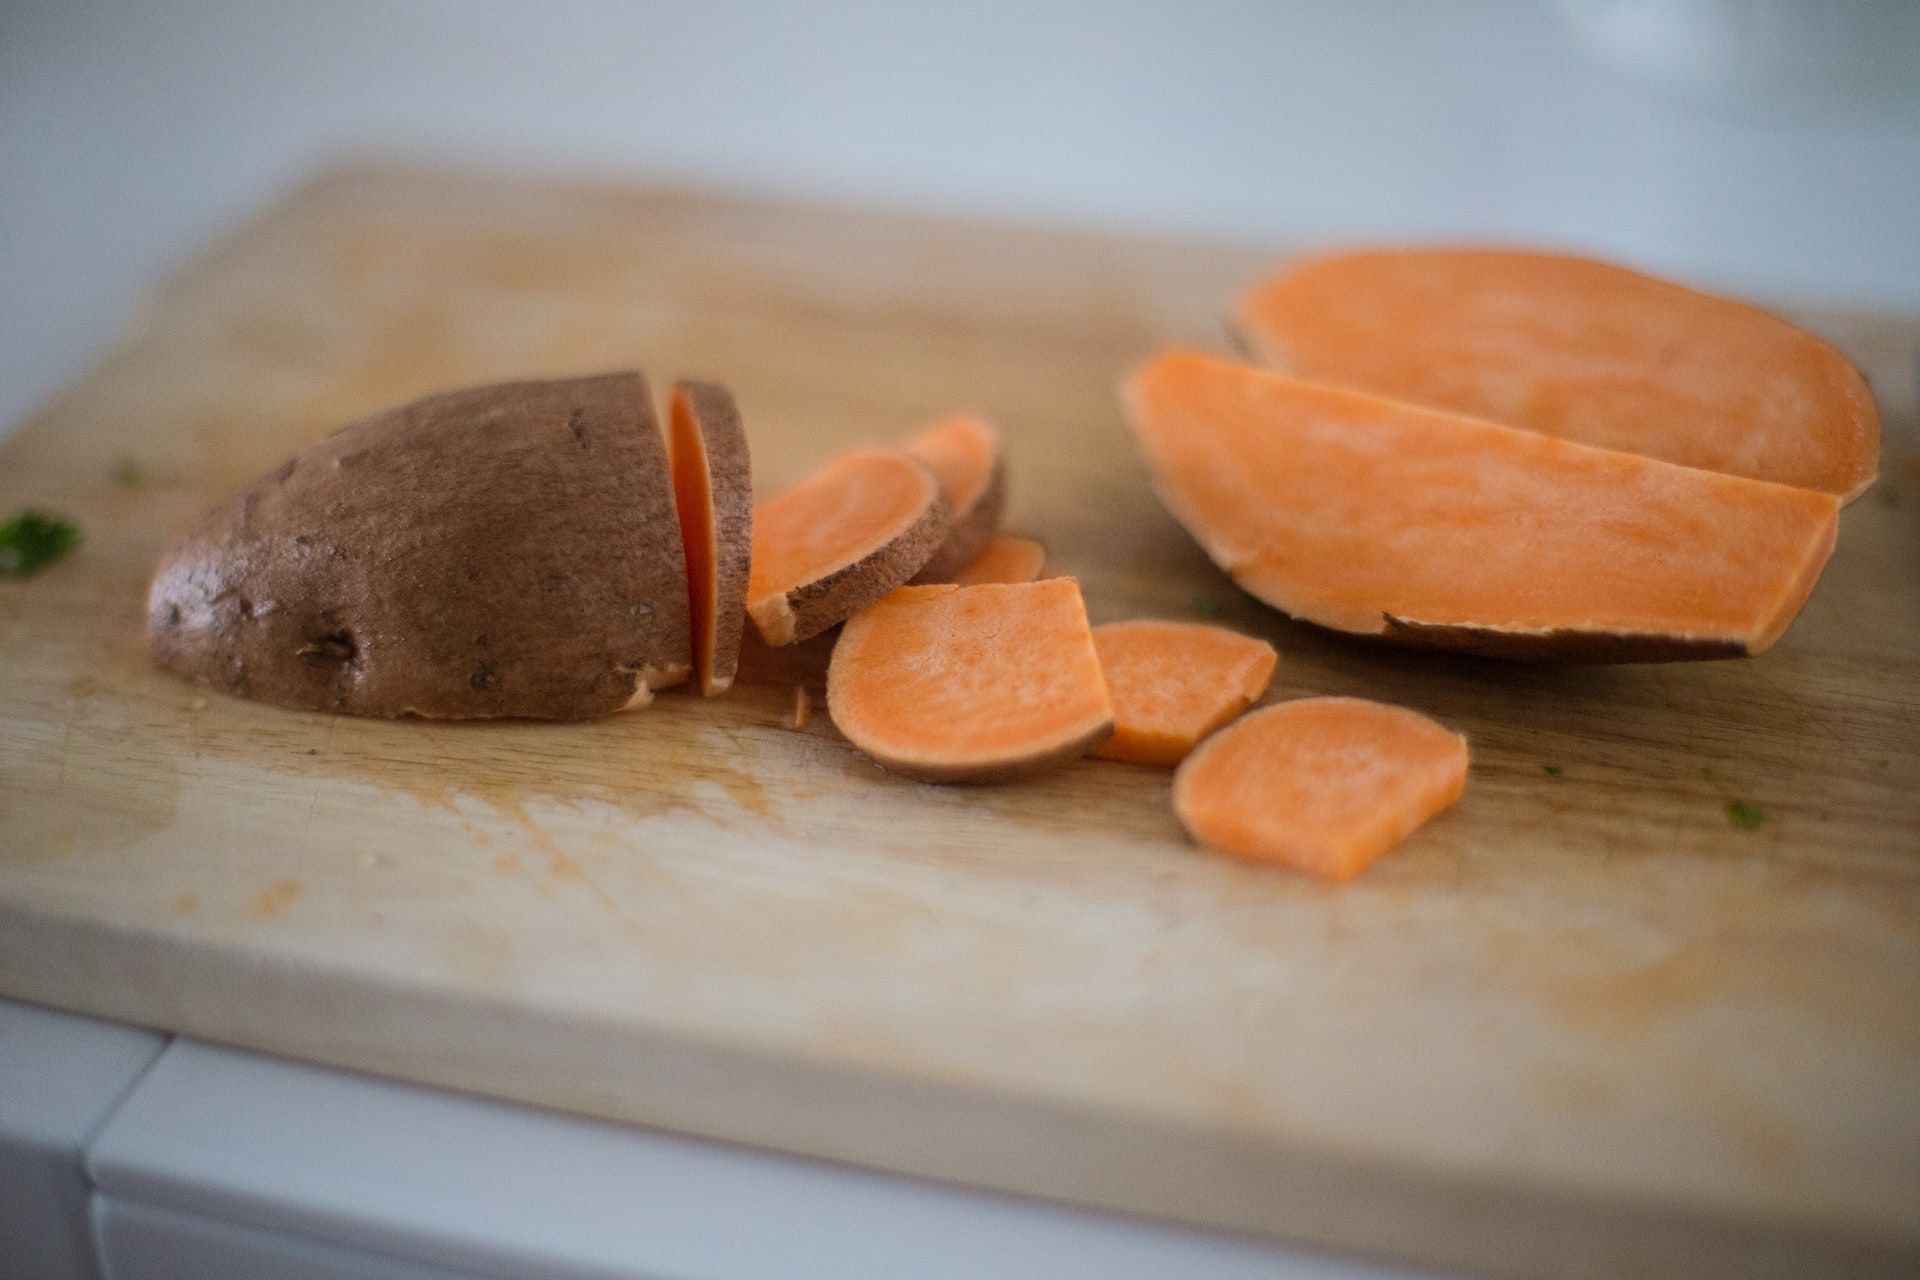 Sweet potatoes are rich in vitamin A. (Image via Pexels/Ela Haney)